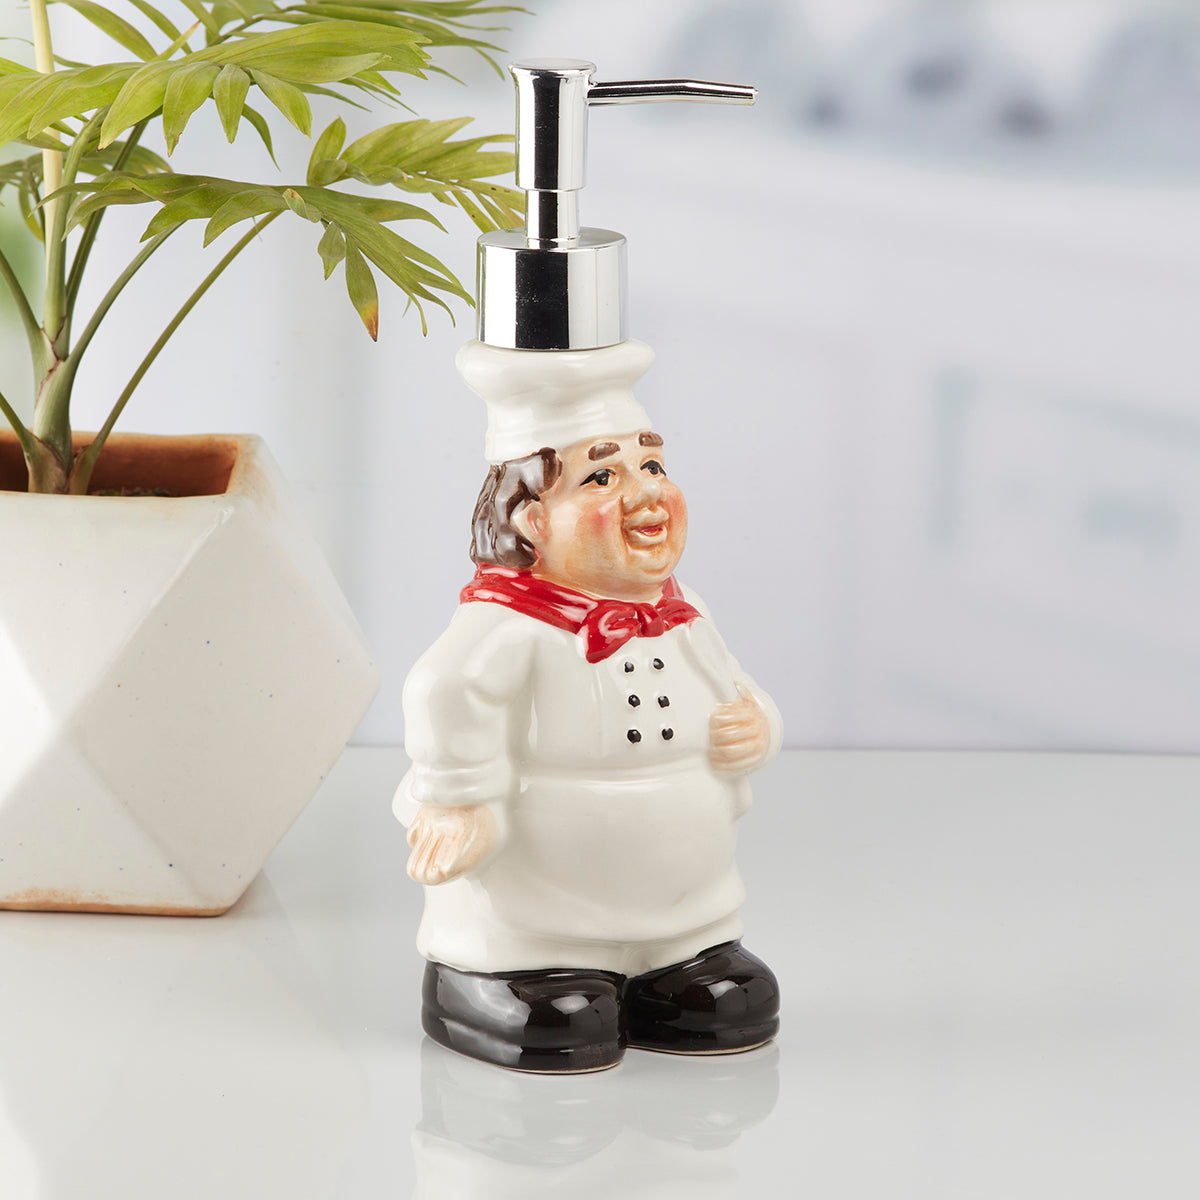 Ceramic Soap Dispenser Pump for Bathroom for Bath Gel, Lotion, Shampoo (10144)